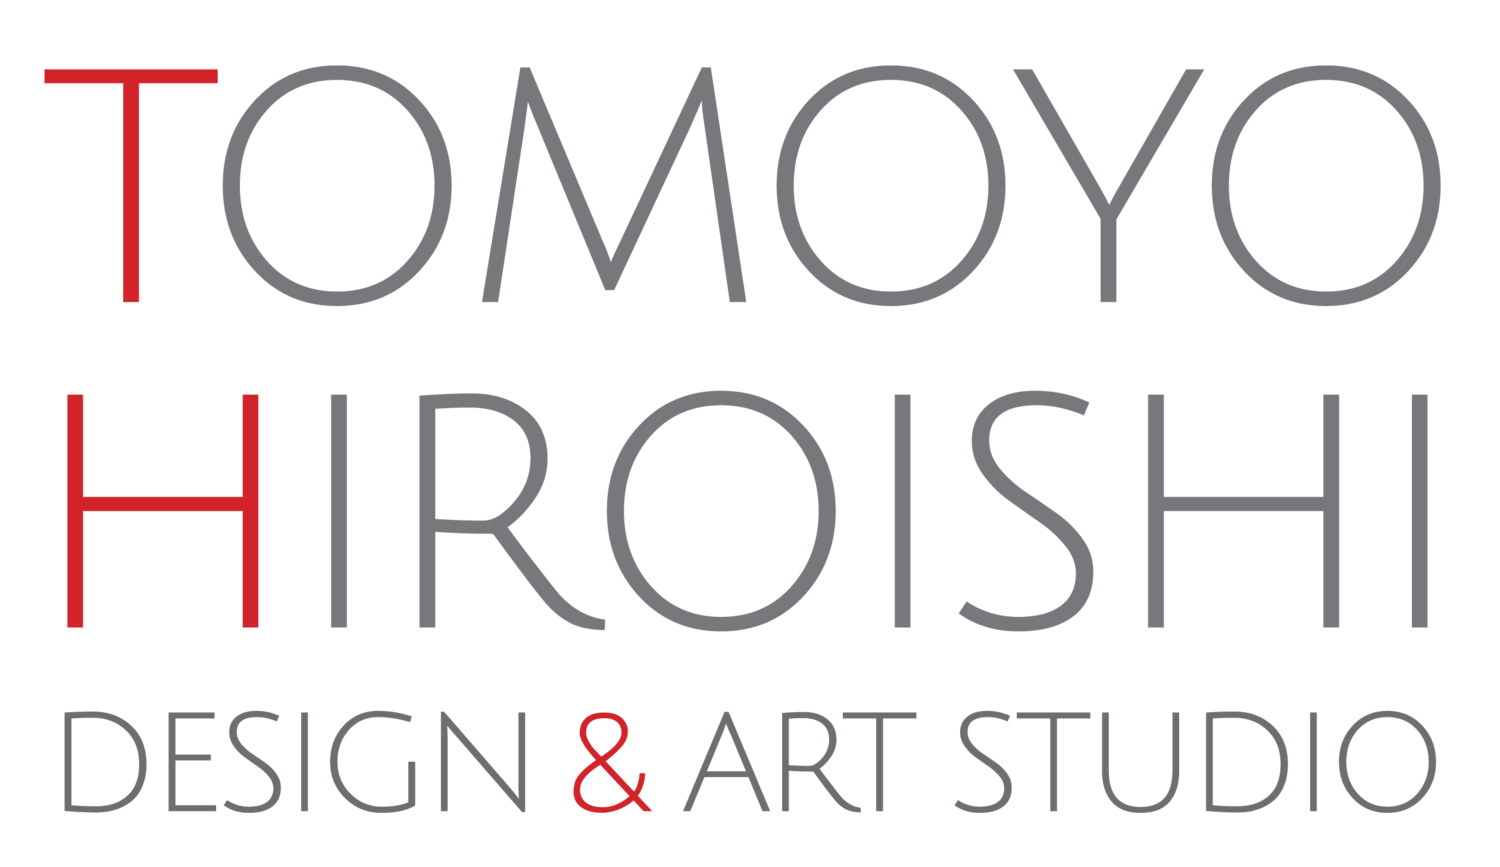 Tomoyo Hiroishi Design & Art Studio 